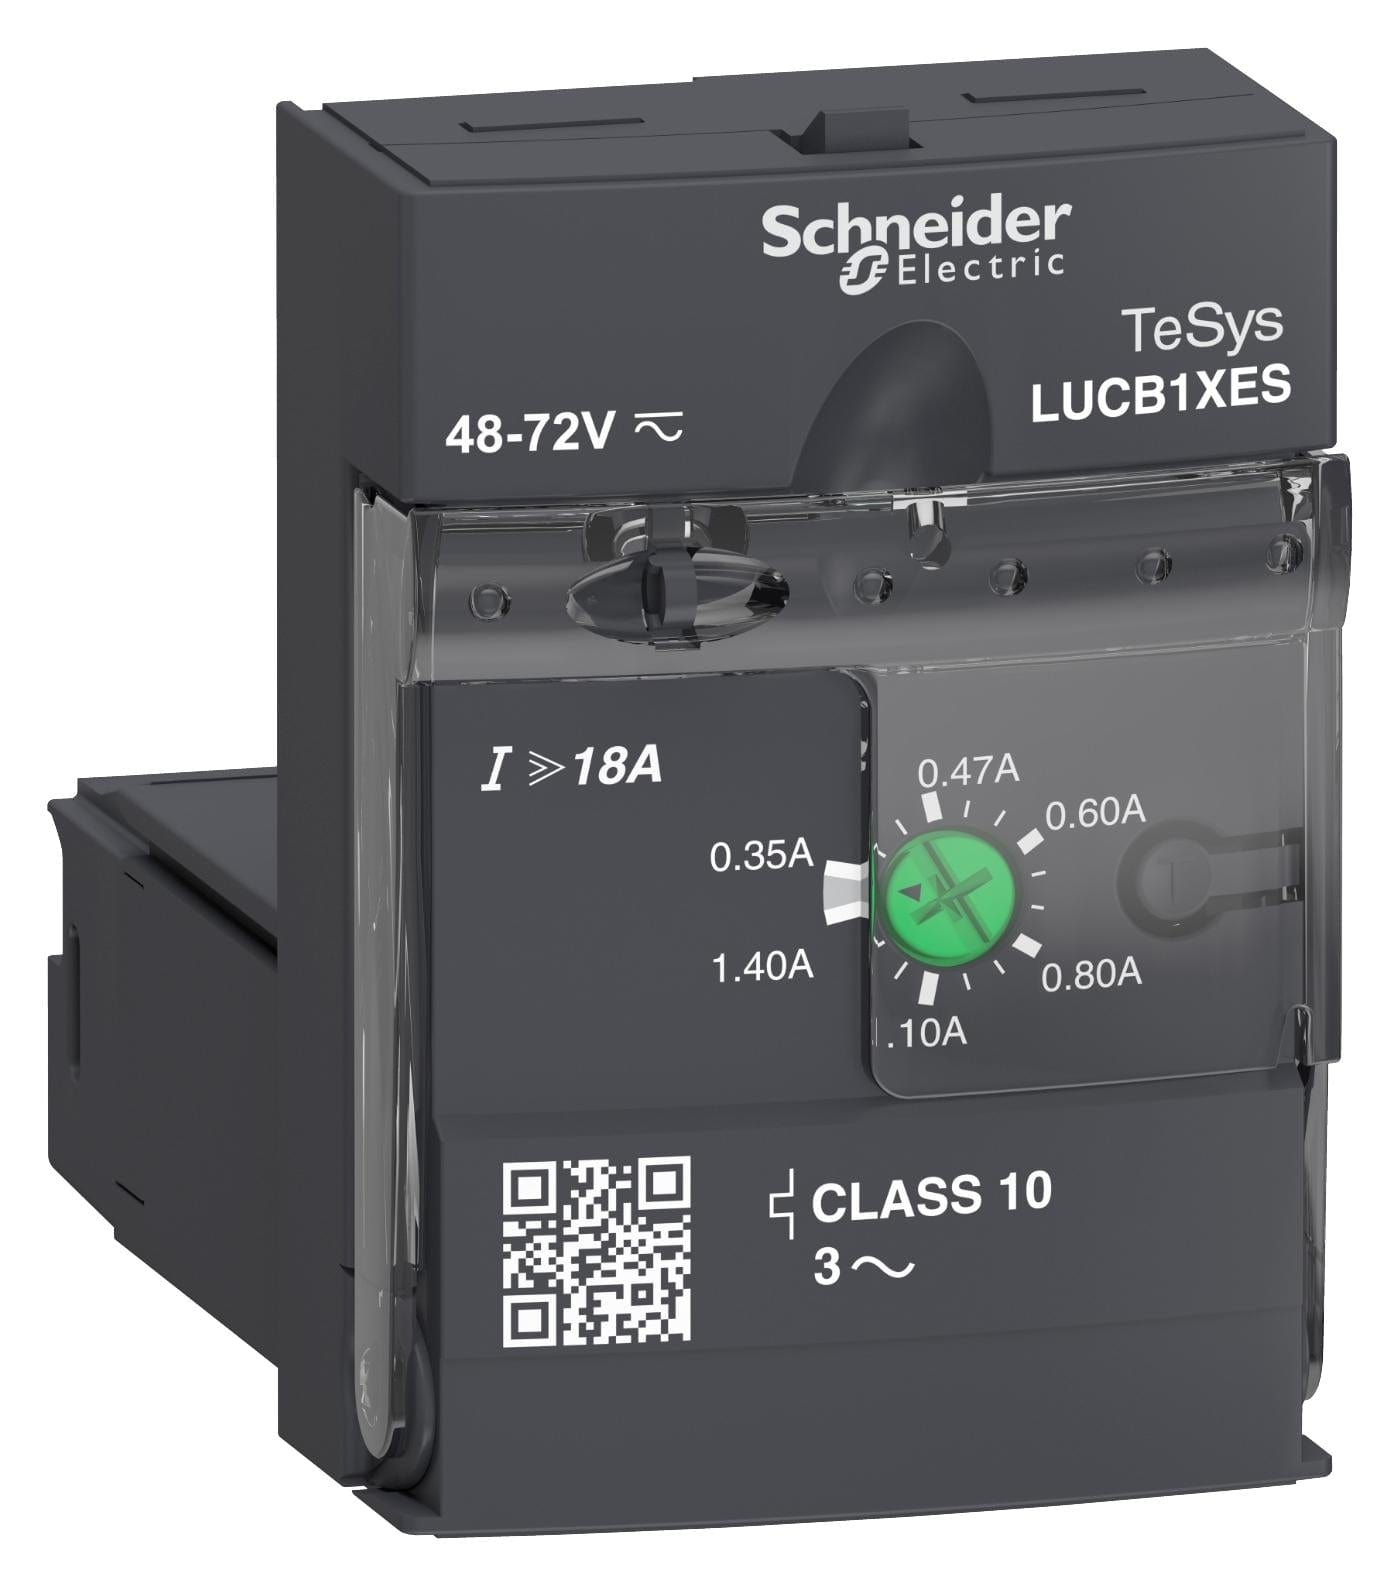 SCHNEIDER ELECTRIC Motor Starter LUCB1XES UNIT 0.35-1.4A48-72V SCHNEIDER ELECTRIC 3407823 LUCB1XES